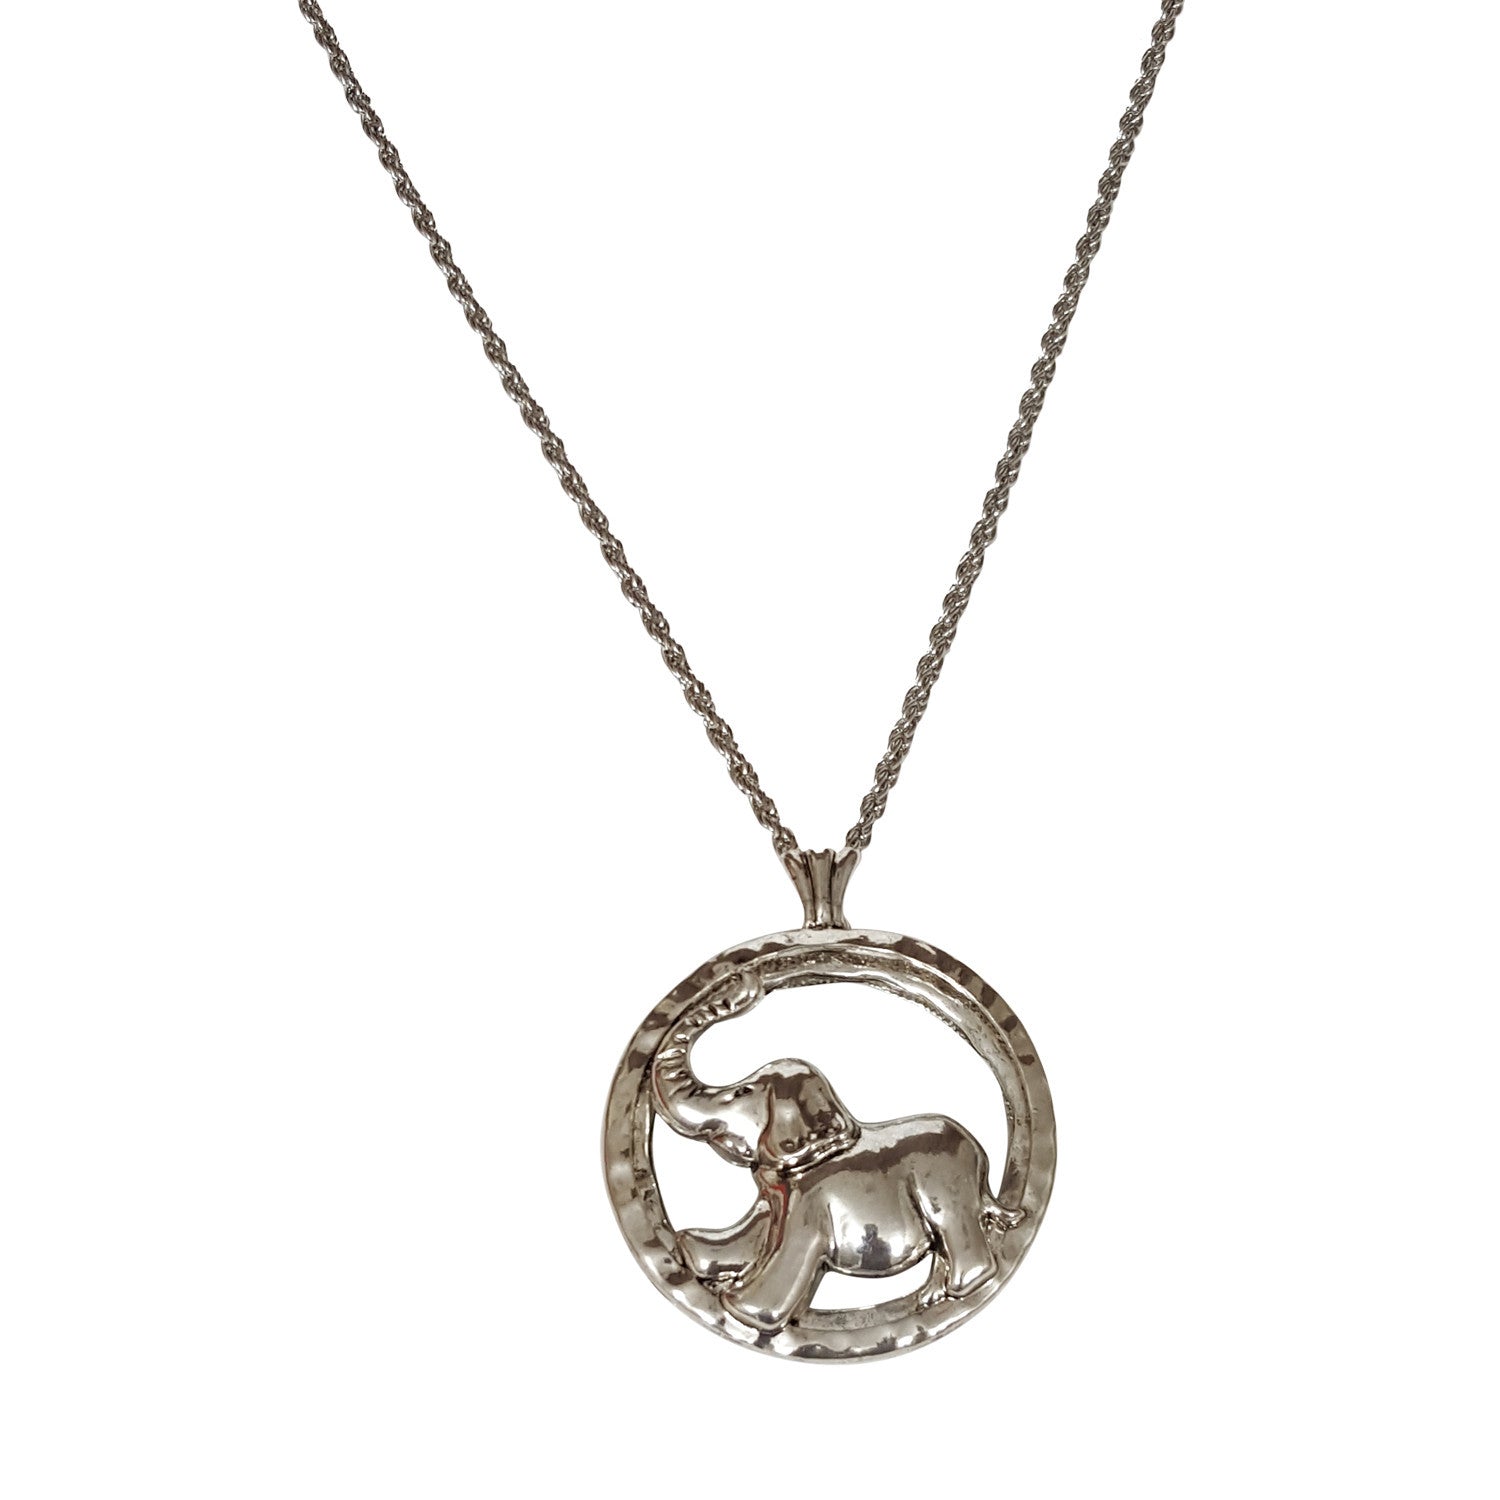 5 of 6: Elephant Pendant-Jewelry-Elephant Boutique-Silver-Pendant-The Black Art Depot